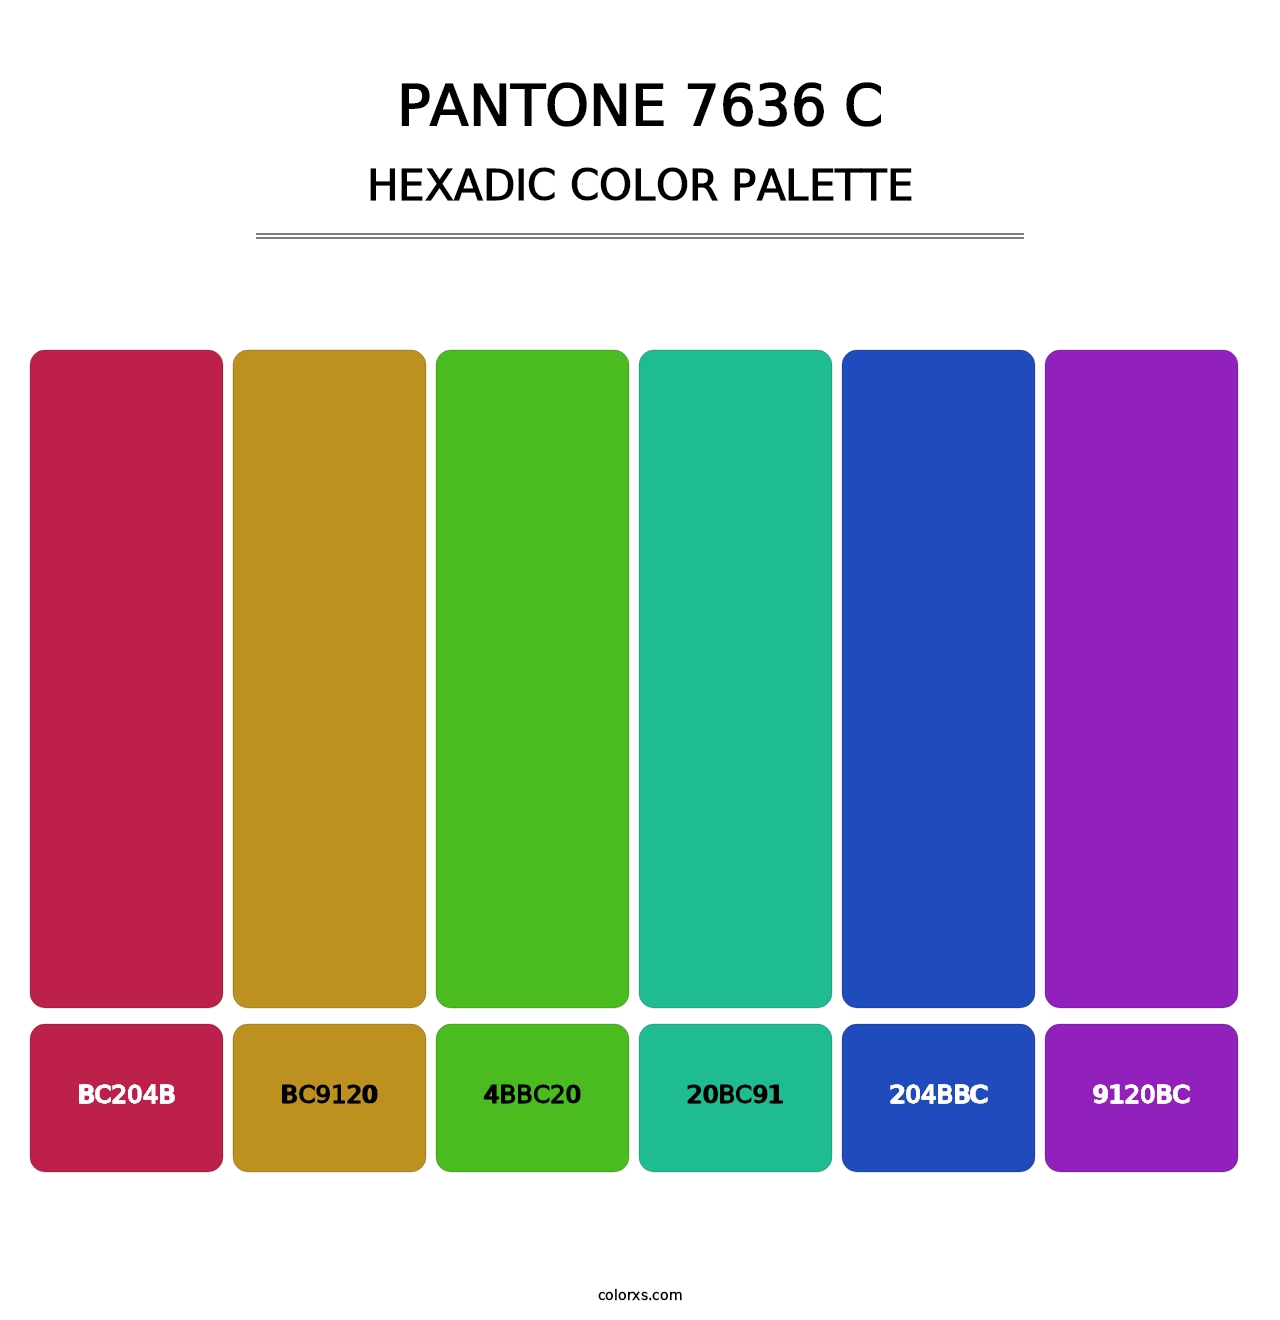 PANTONE 7636 C - Hexadic Color Palette